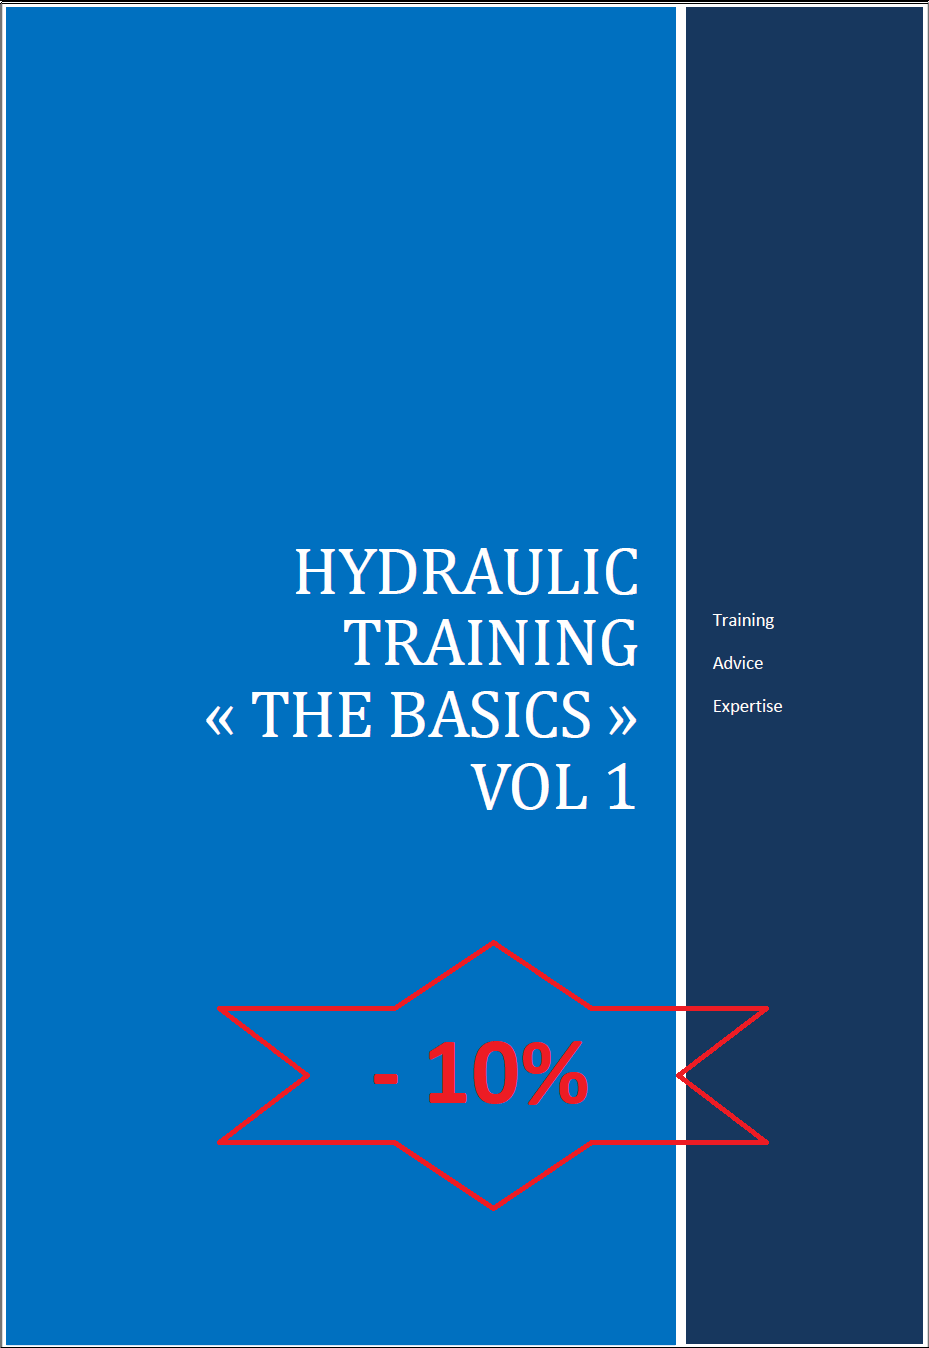 Hydraulic training the basics vol 1